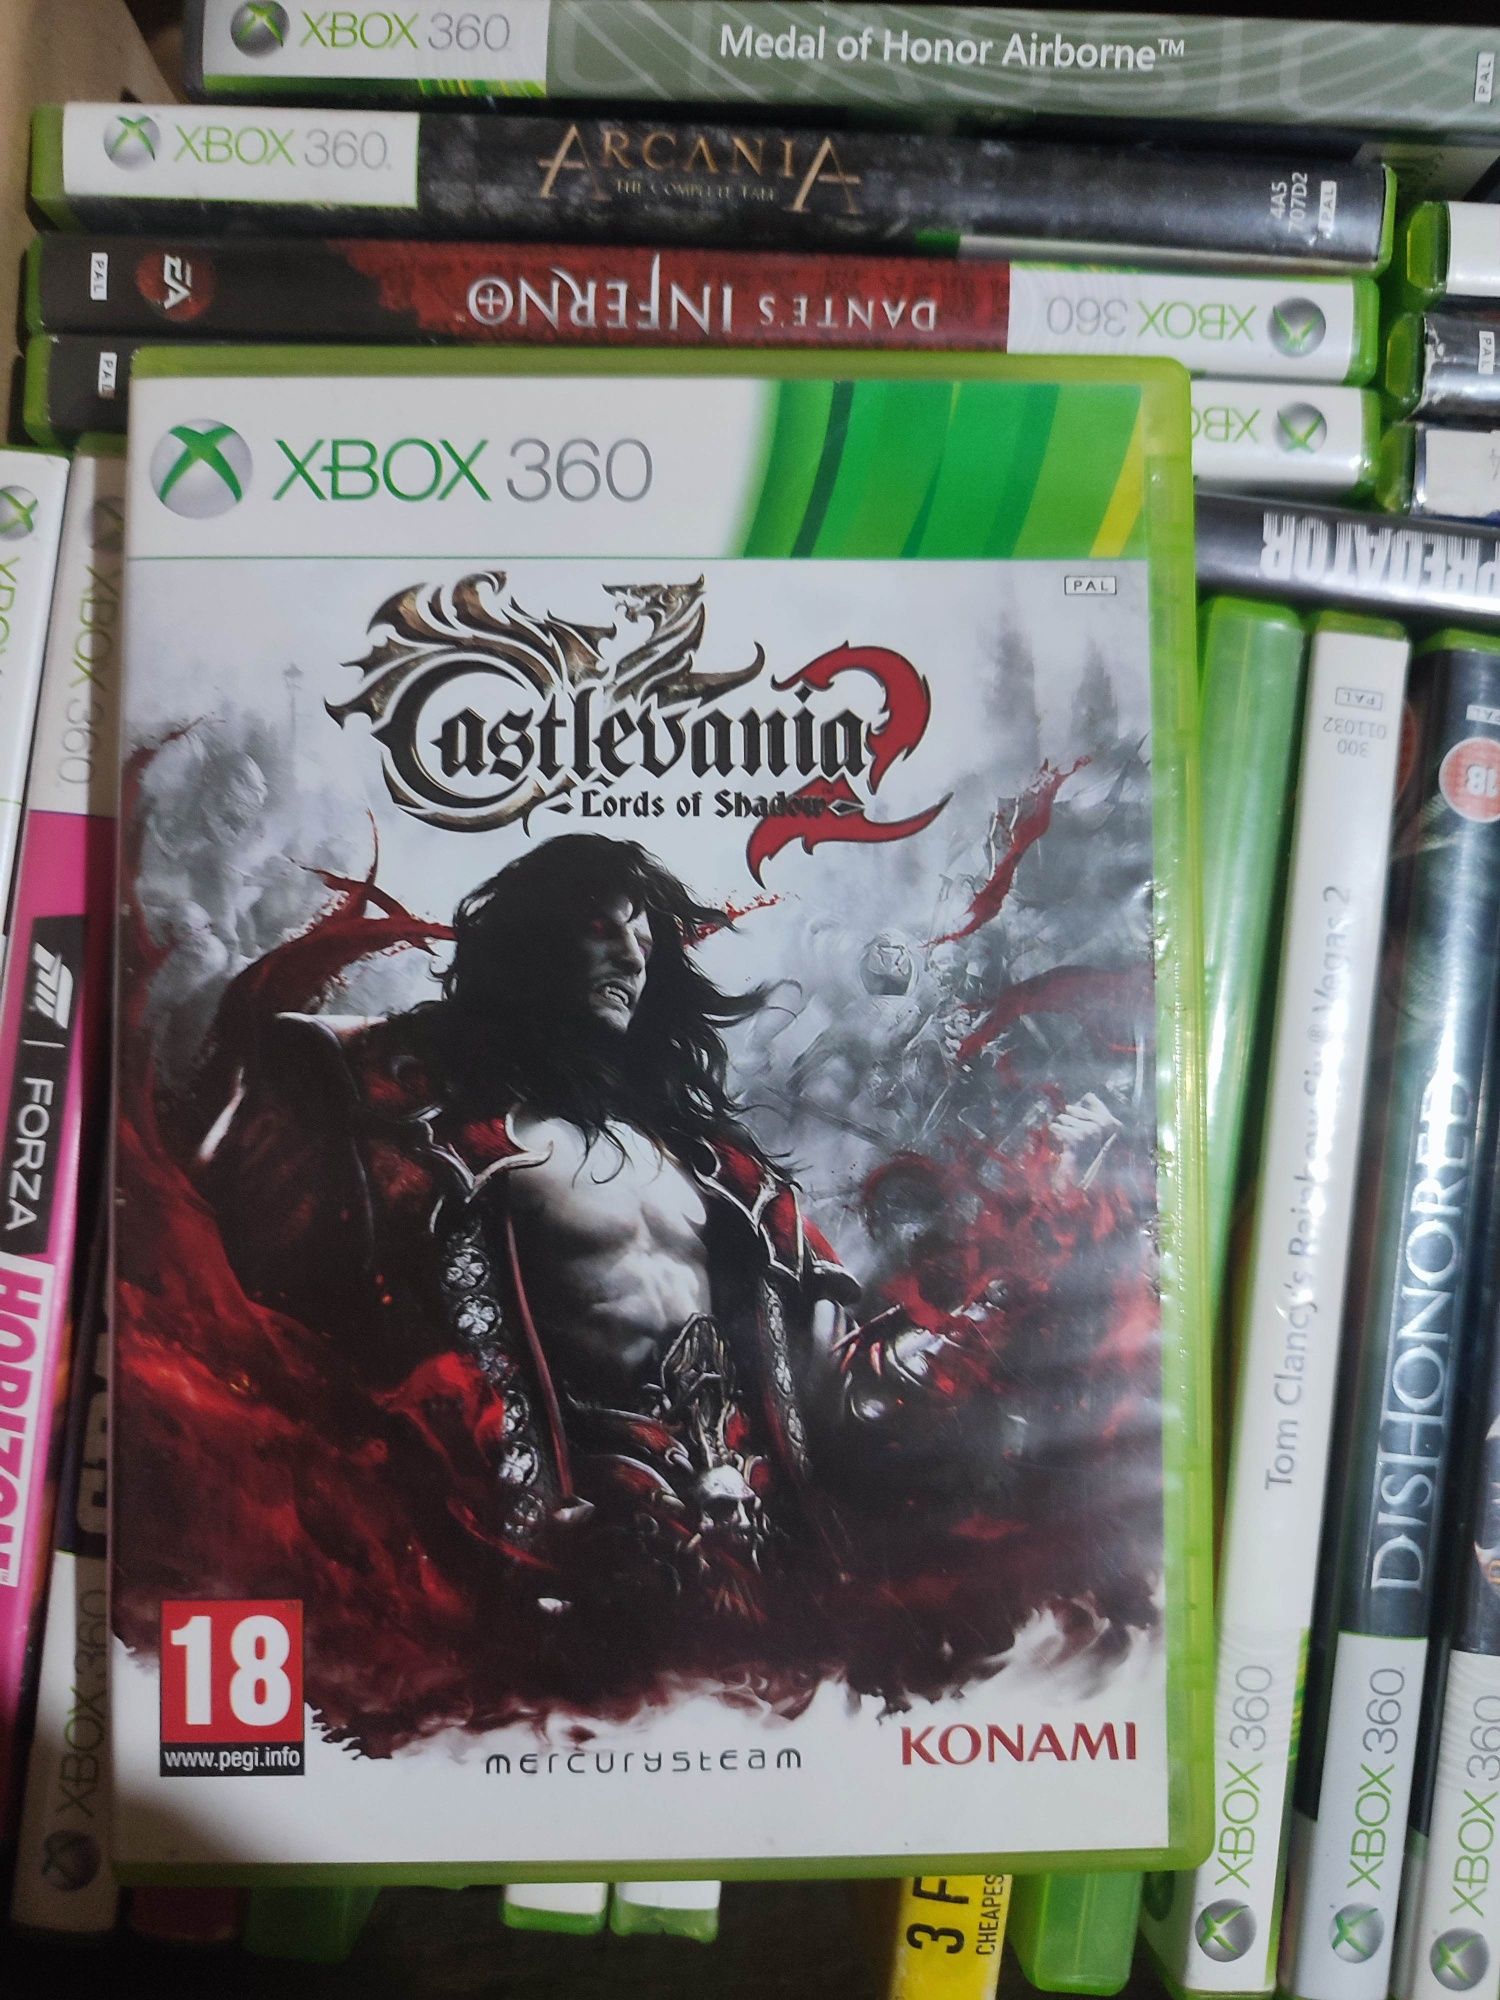 Castelvania 2 xbox360. X360.  Xbox 360